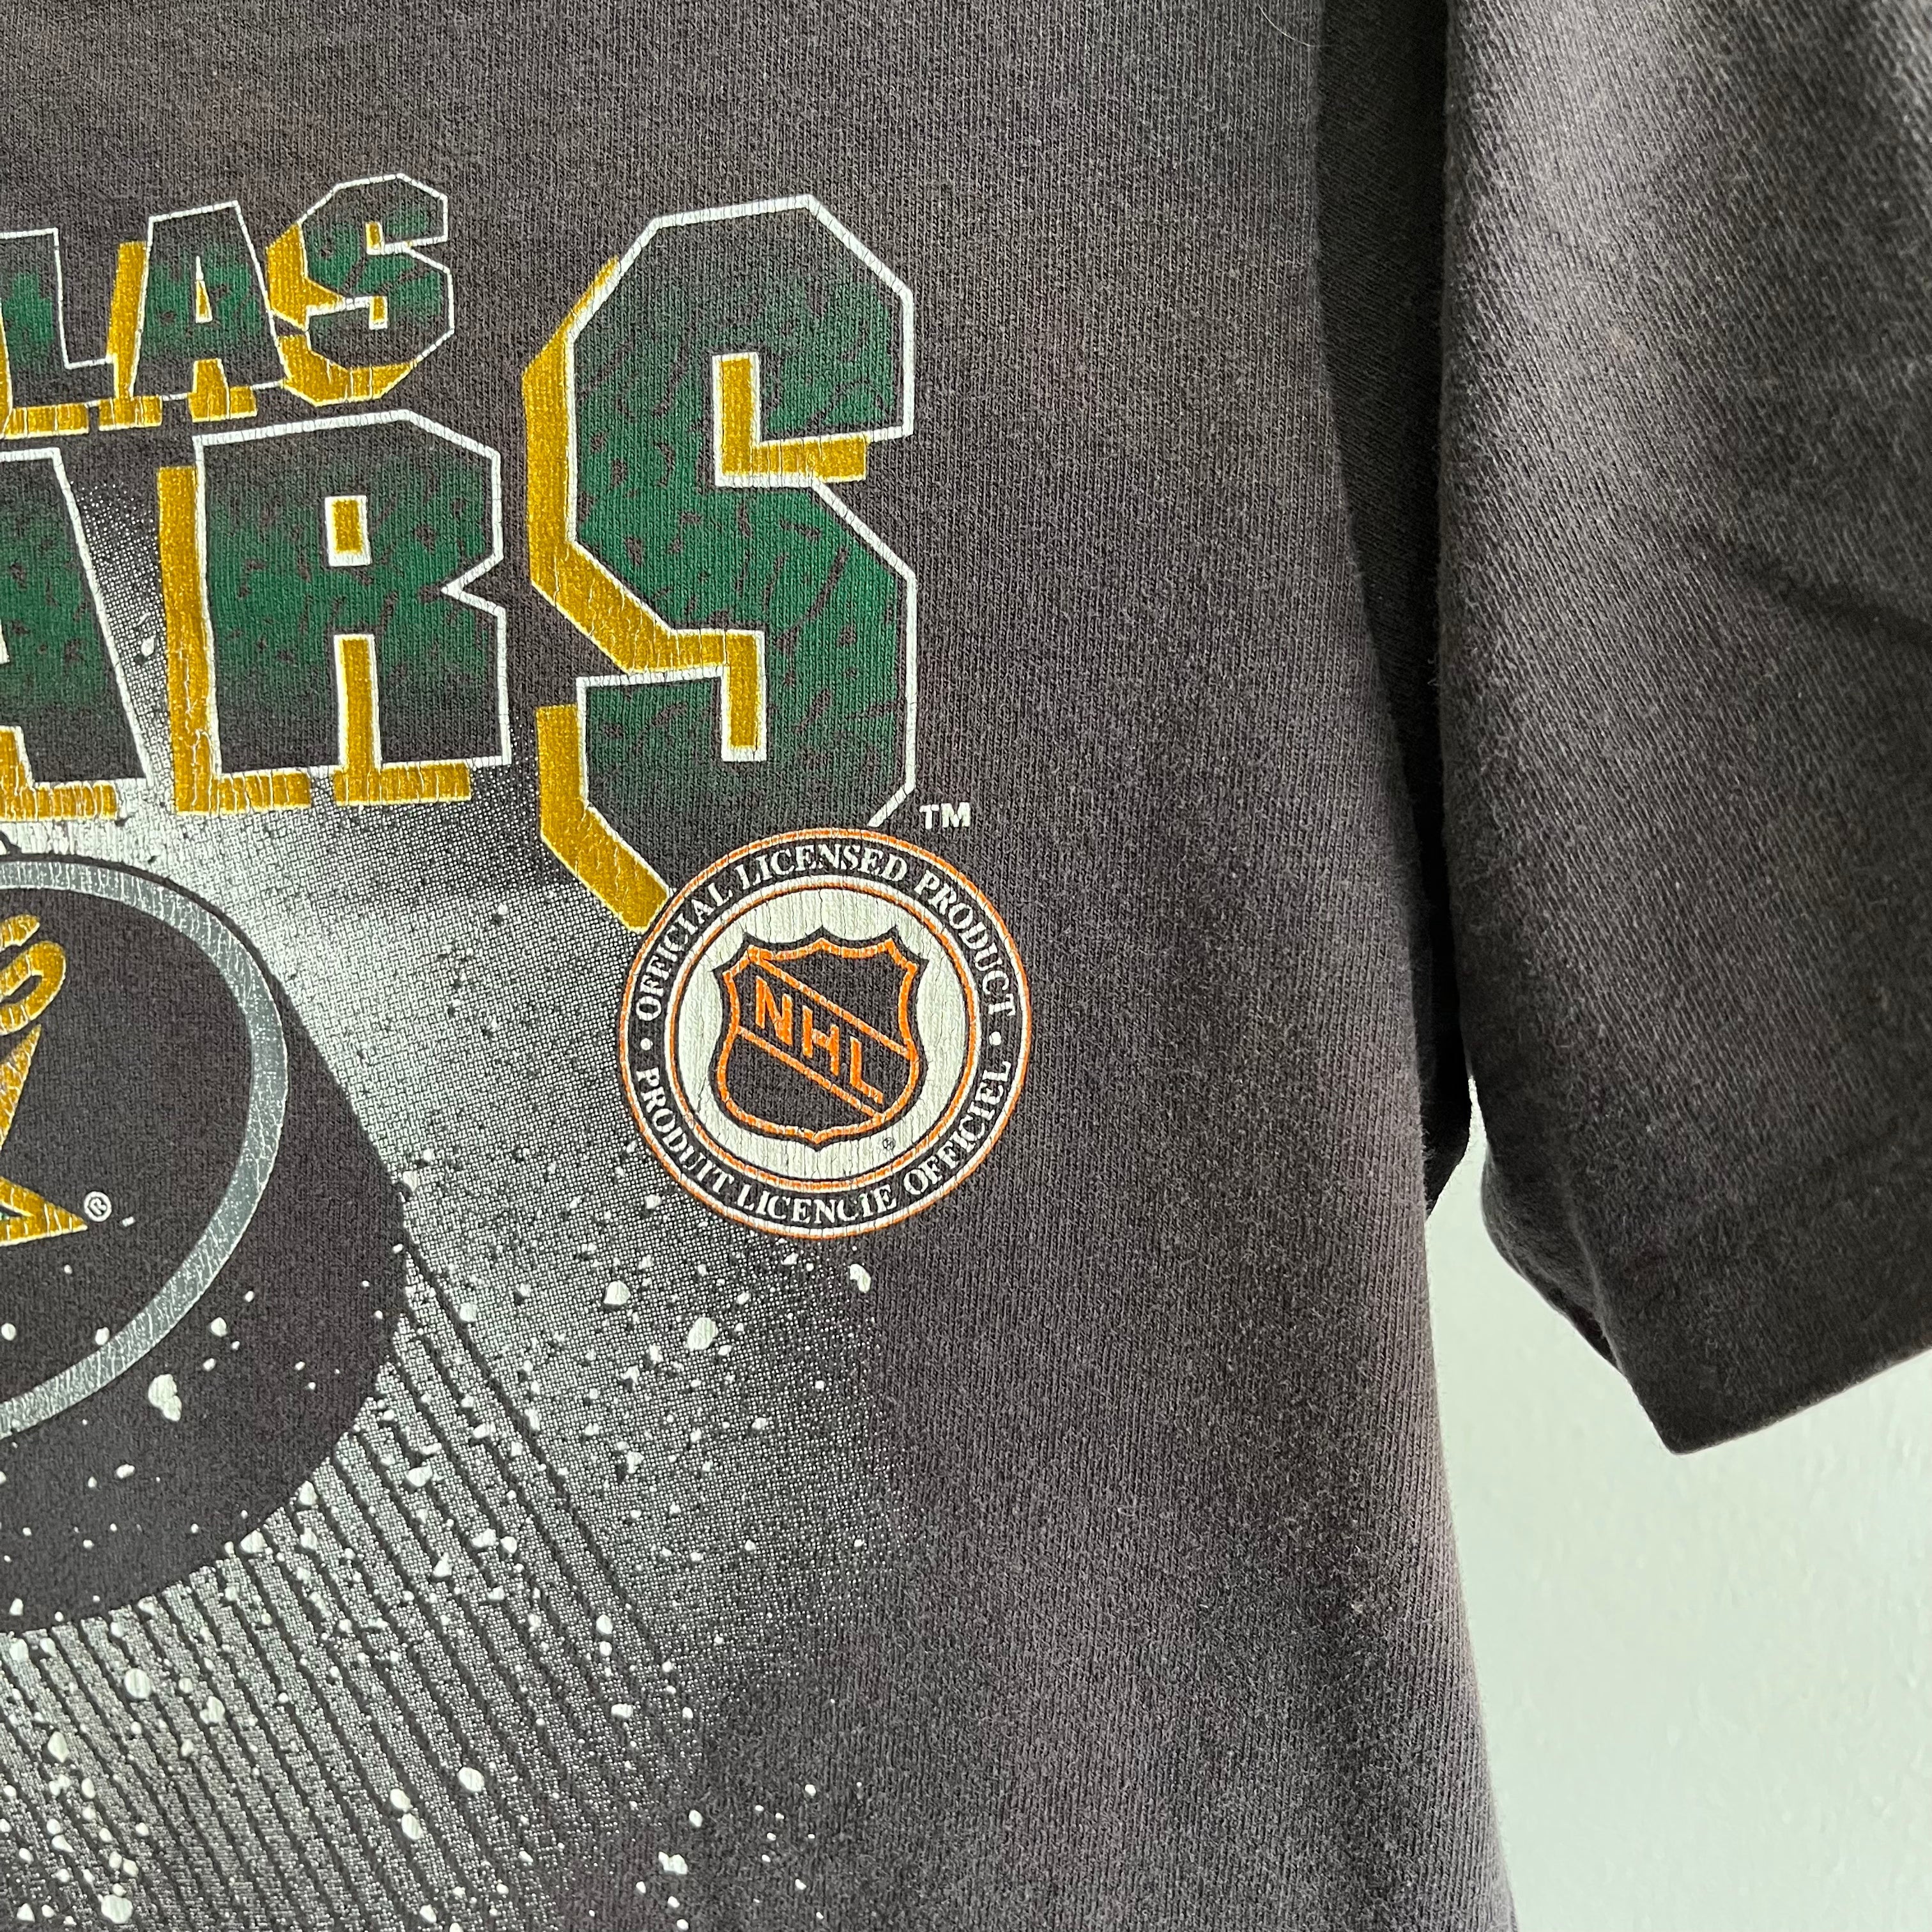 1990s Dallas Stars Smaller T-Shirt